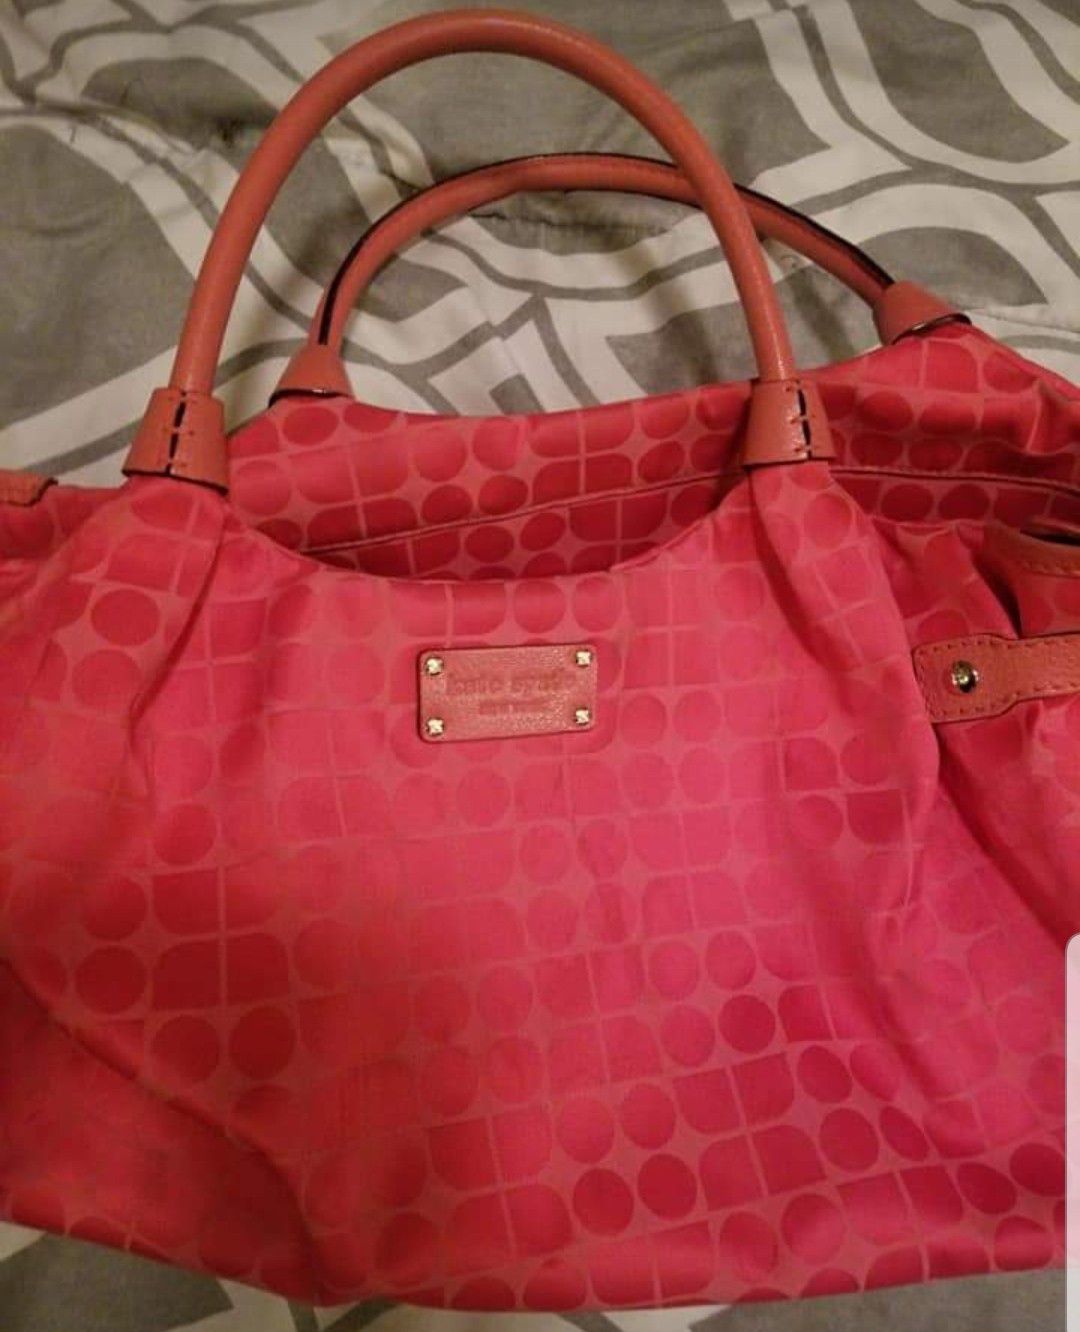 Authentic Kate Spade purse